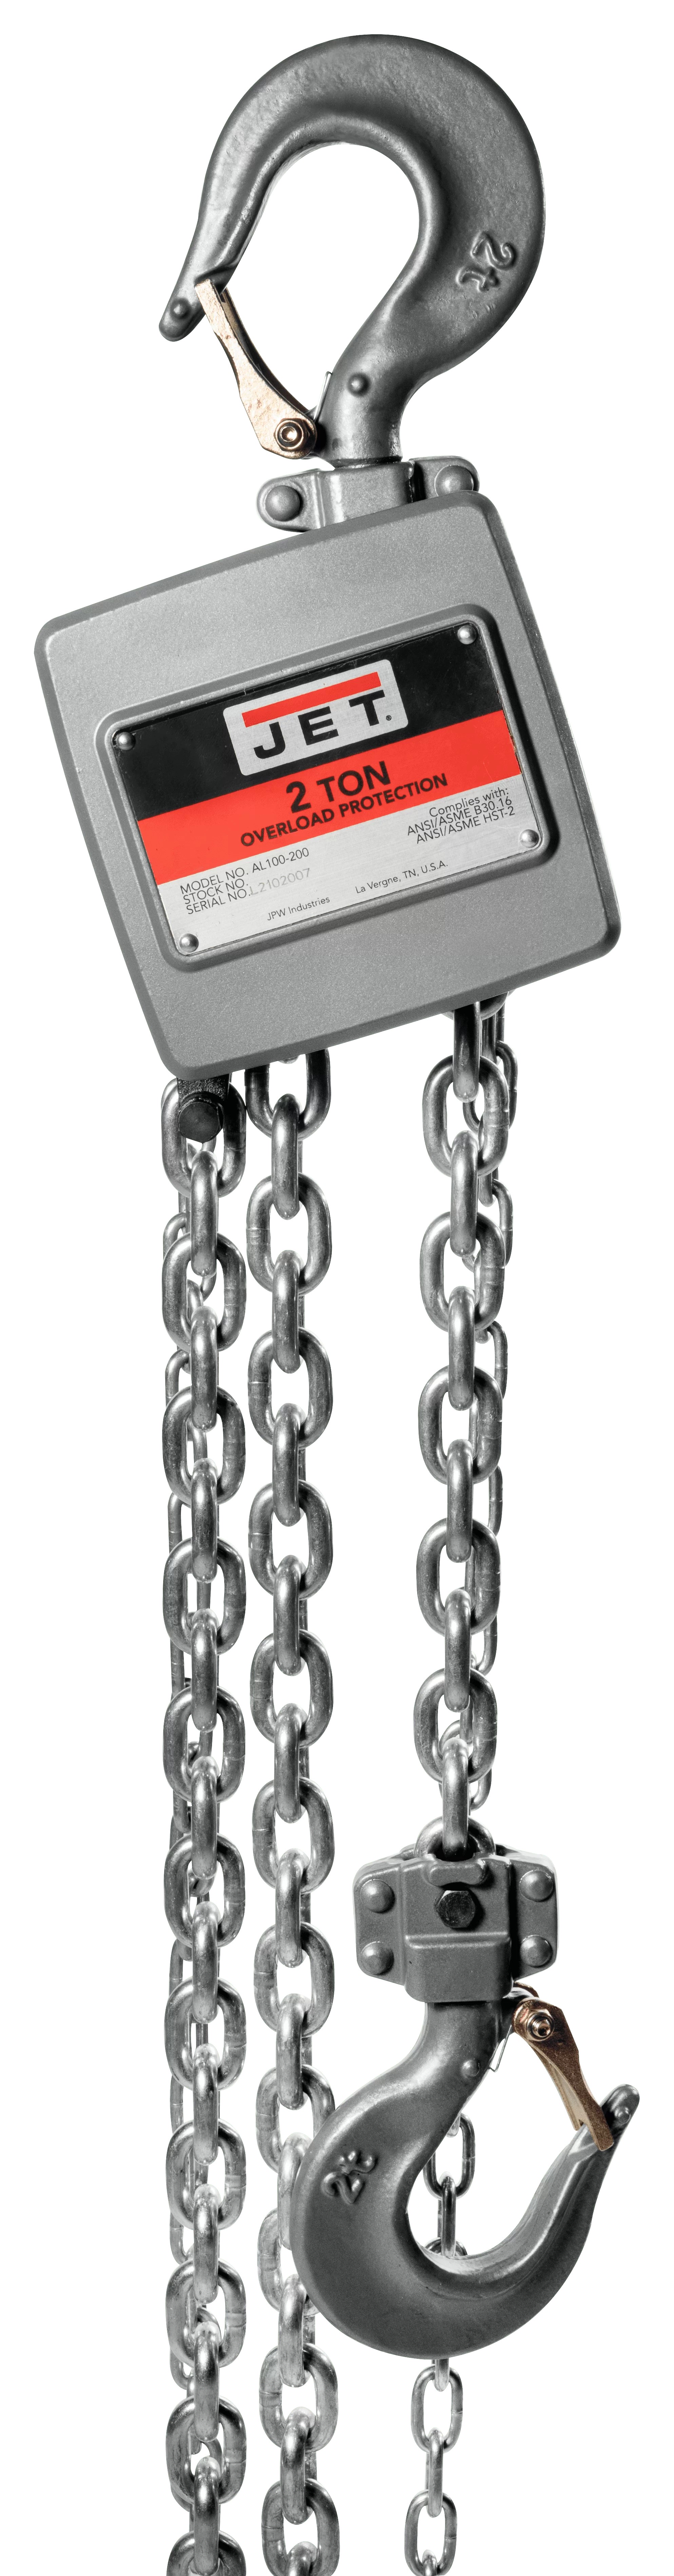 AL100-200-30 2 Ton Aluminum Hand Chain Hoist with 30ft of Lift